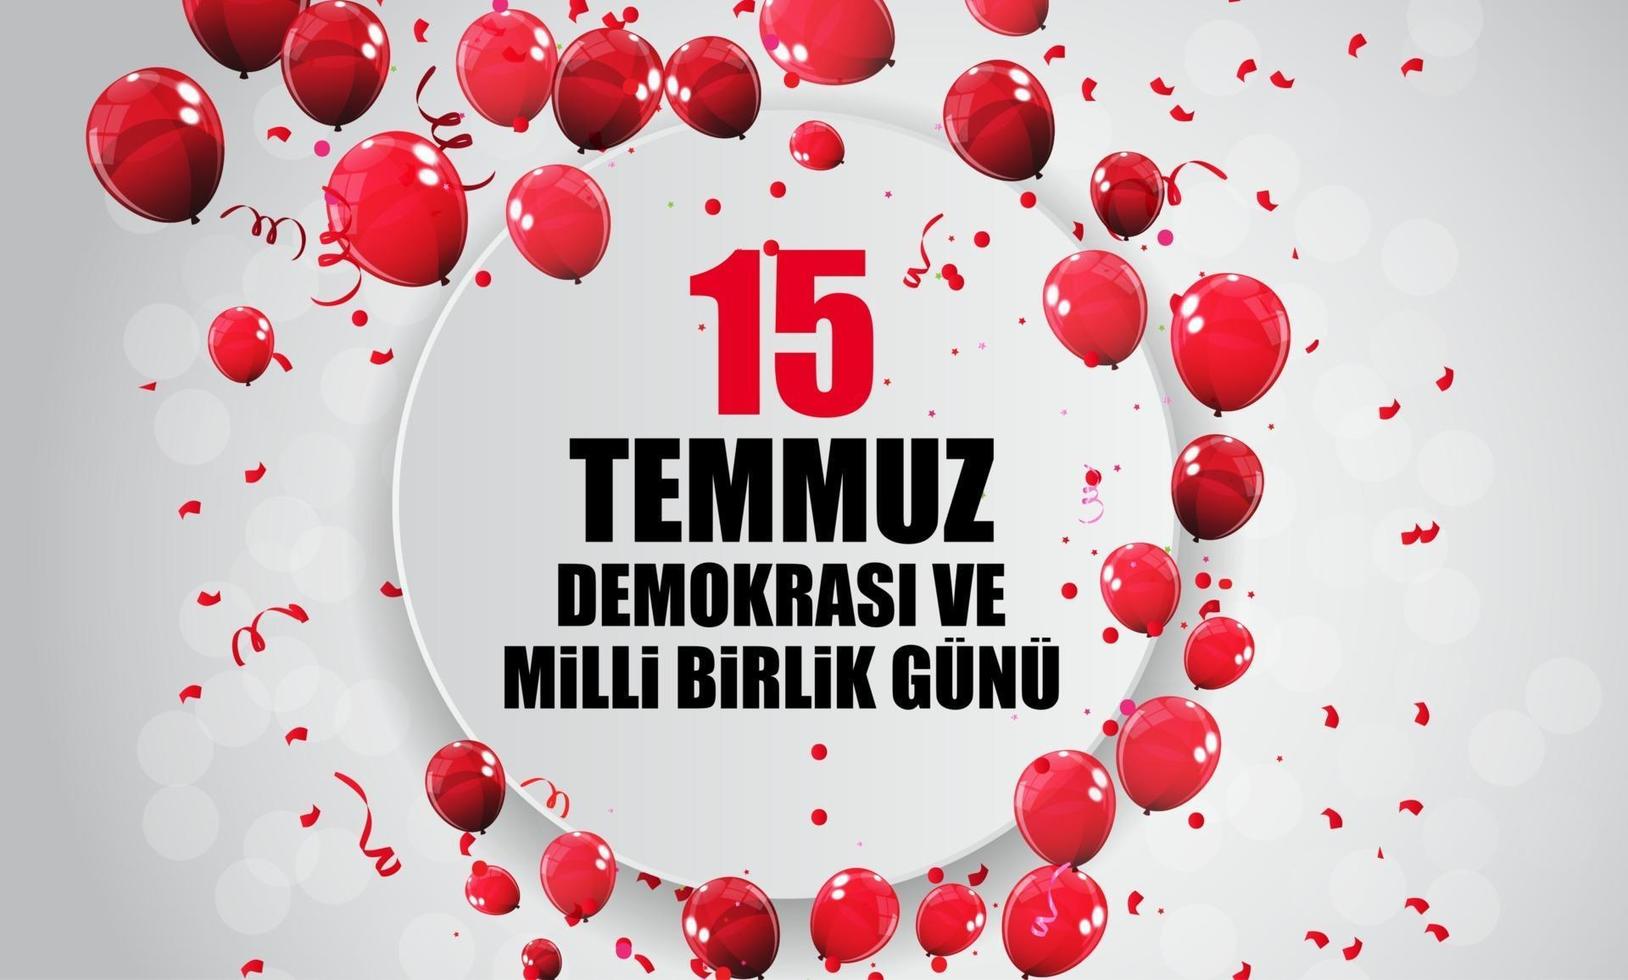 15 juli, lycklig helgdag demokrati Republiken Turkiet turkiska talar 15 temmuz demokrasi ve milli birlik gunu. vektor illustration